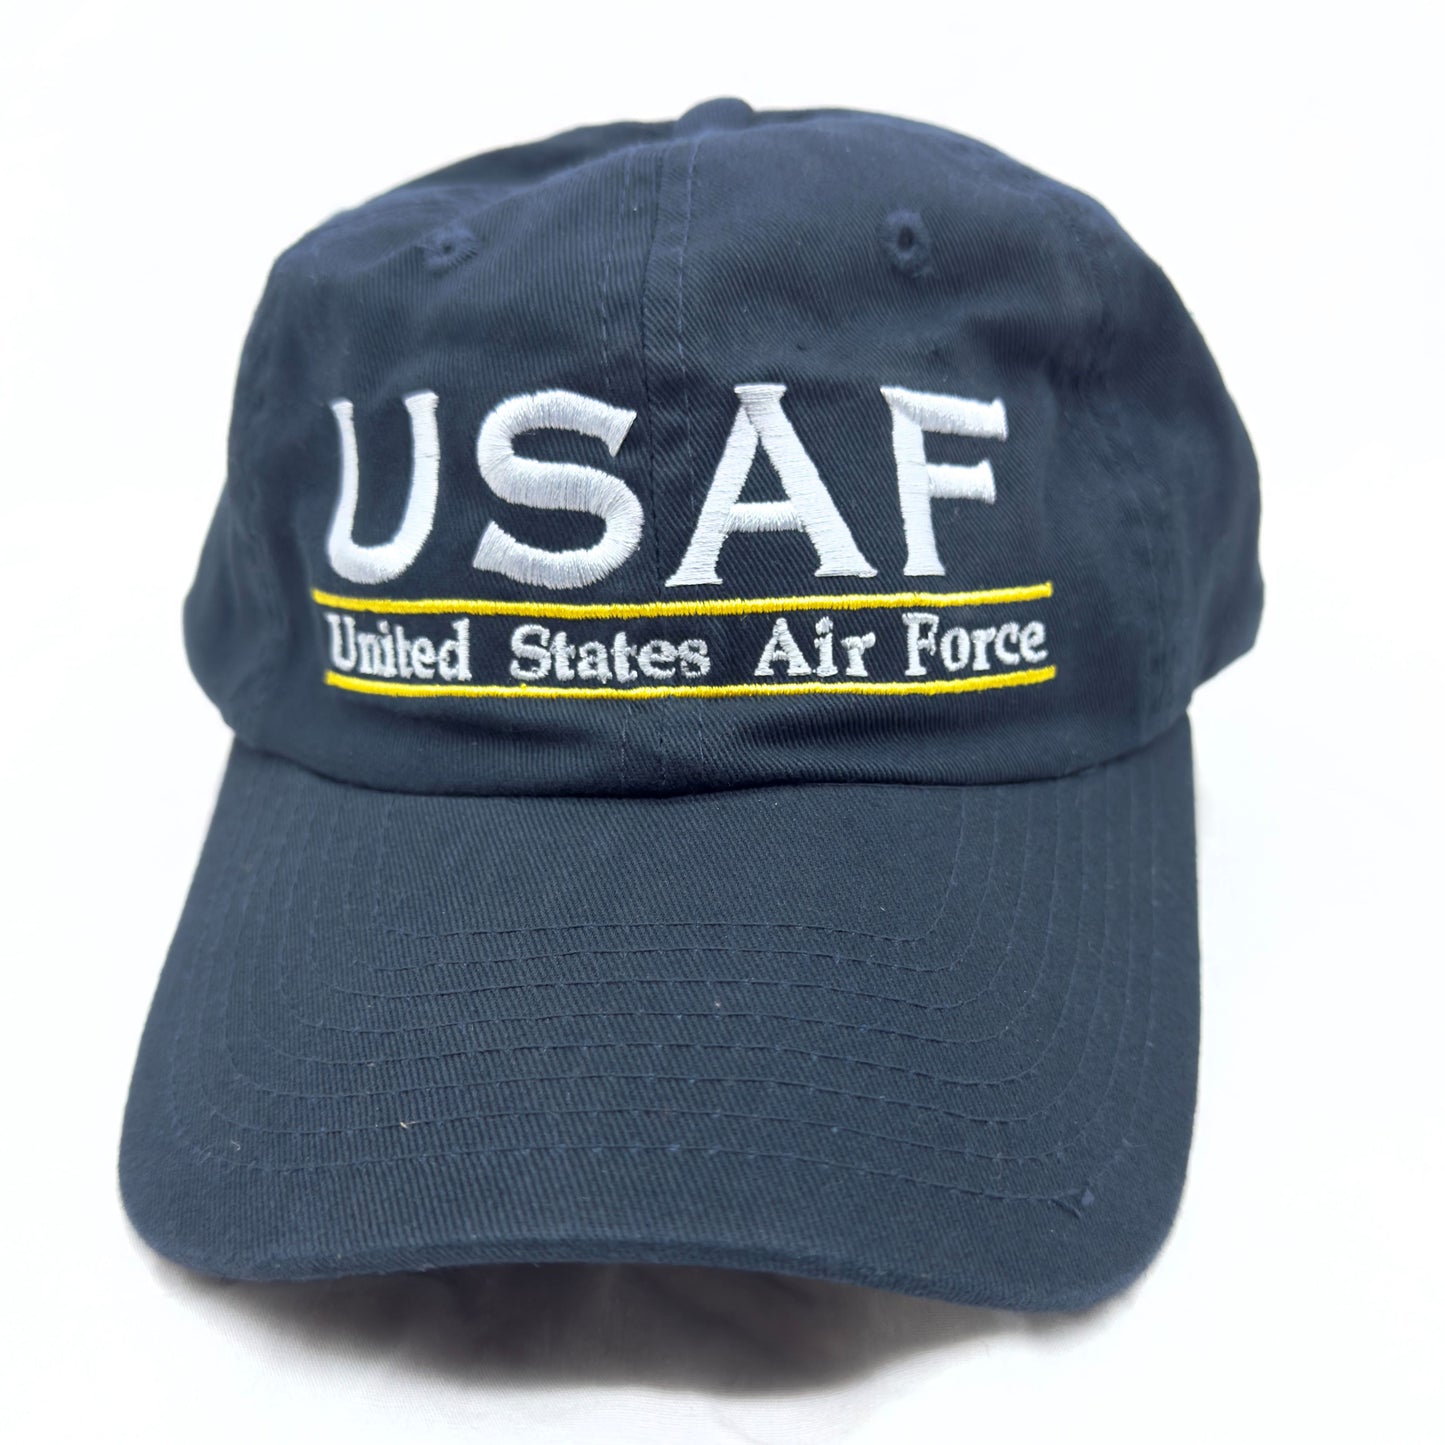 USAF United States Air Force Cap Rosie Long Beach